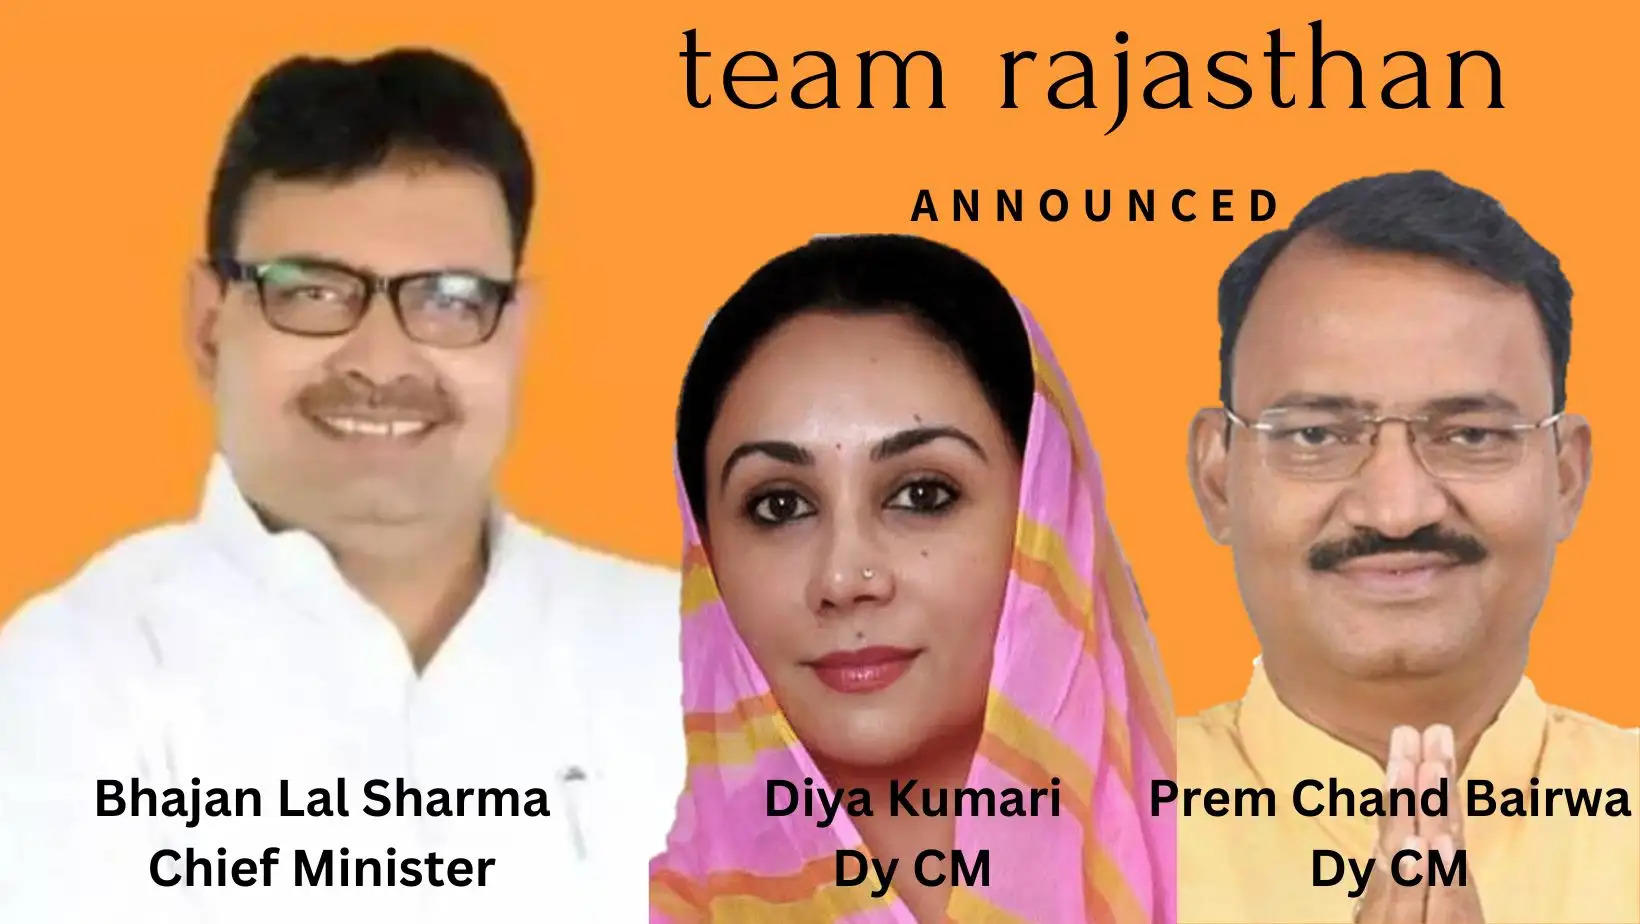 Deputy Chief Minister of Rajasthan Diya Kumari and Prem Chand Bairwa BJP Rajasthan CM announced